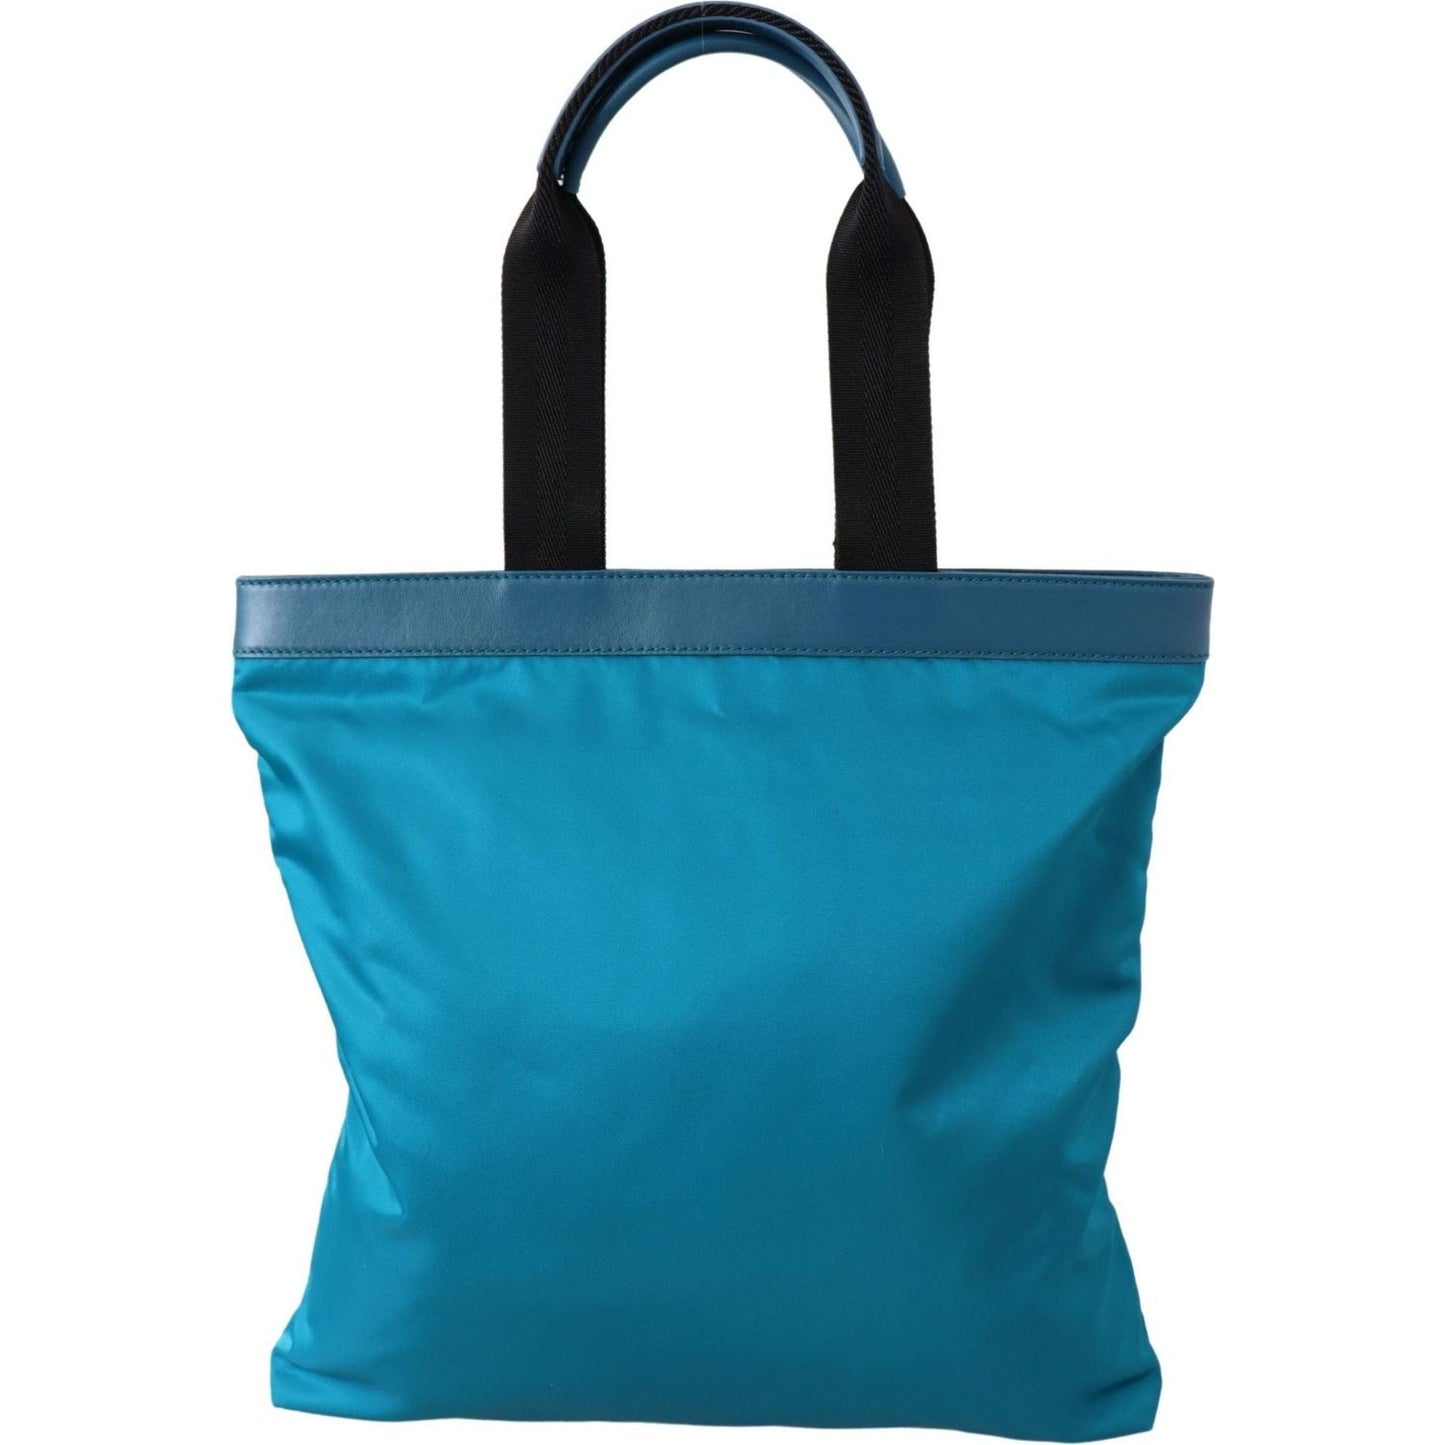 Dolce & Gabbana Sapphire Blue Nylon Tote Bag with Logo Detail blue-dg-logo-women-shopping-hand-tote-bag